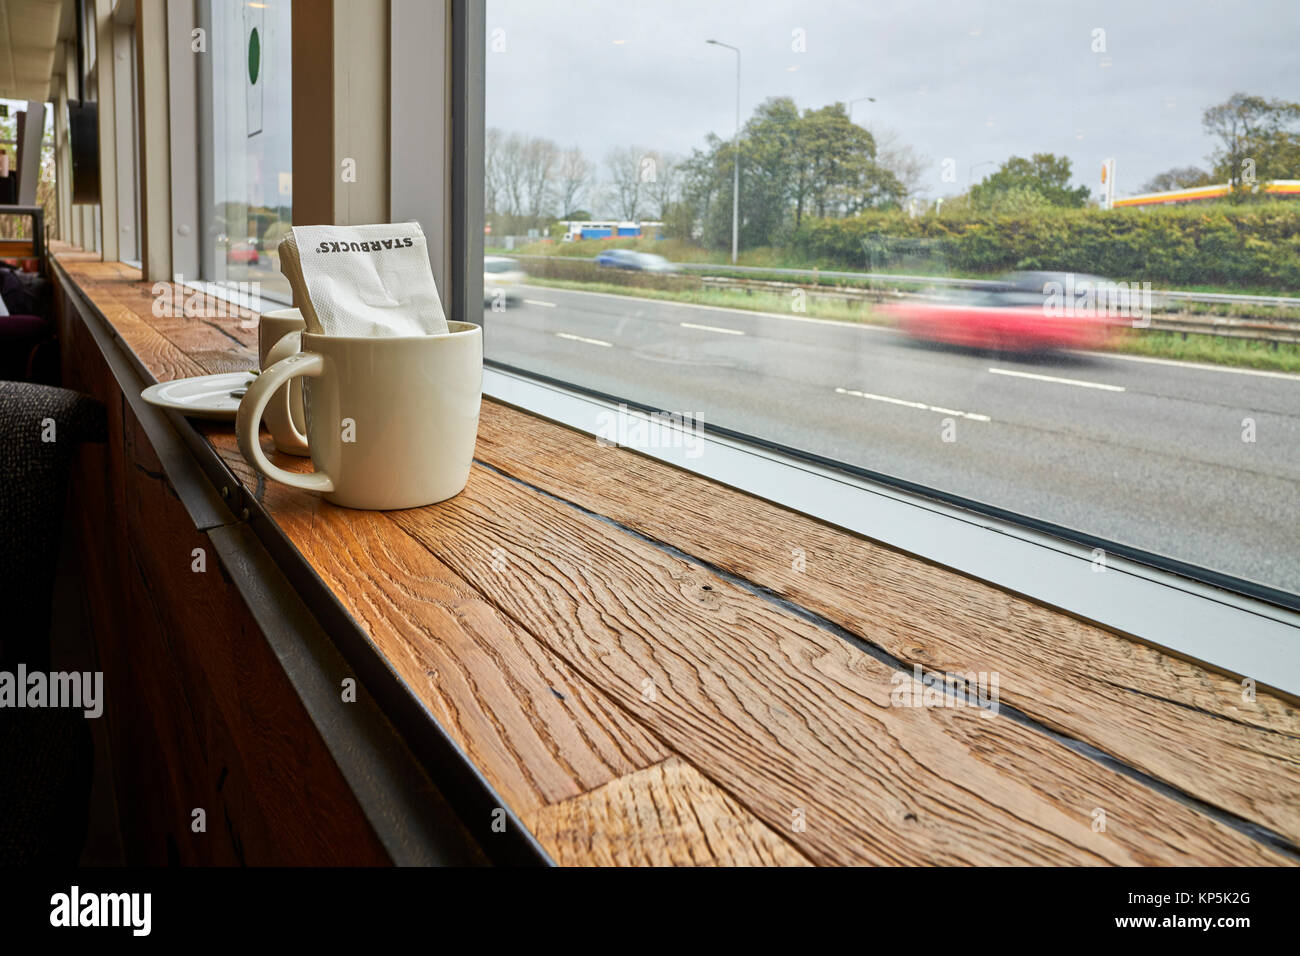 Starbucks coffee mug and serviette at M6 motorway service station Stock Photo